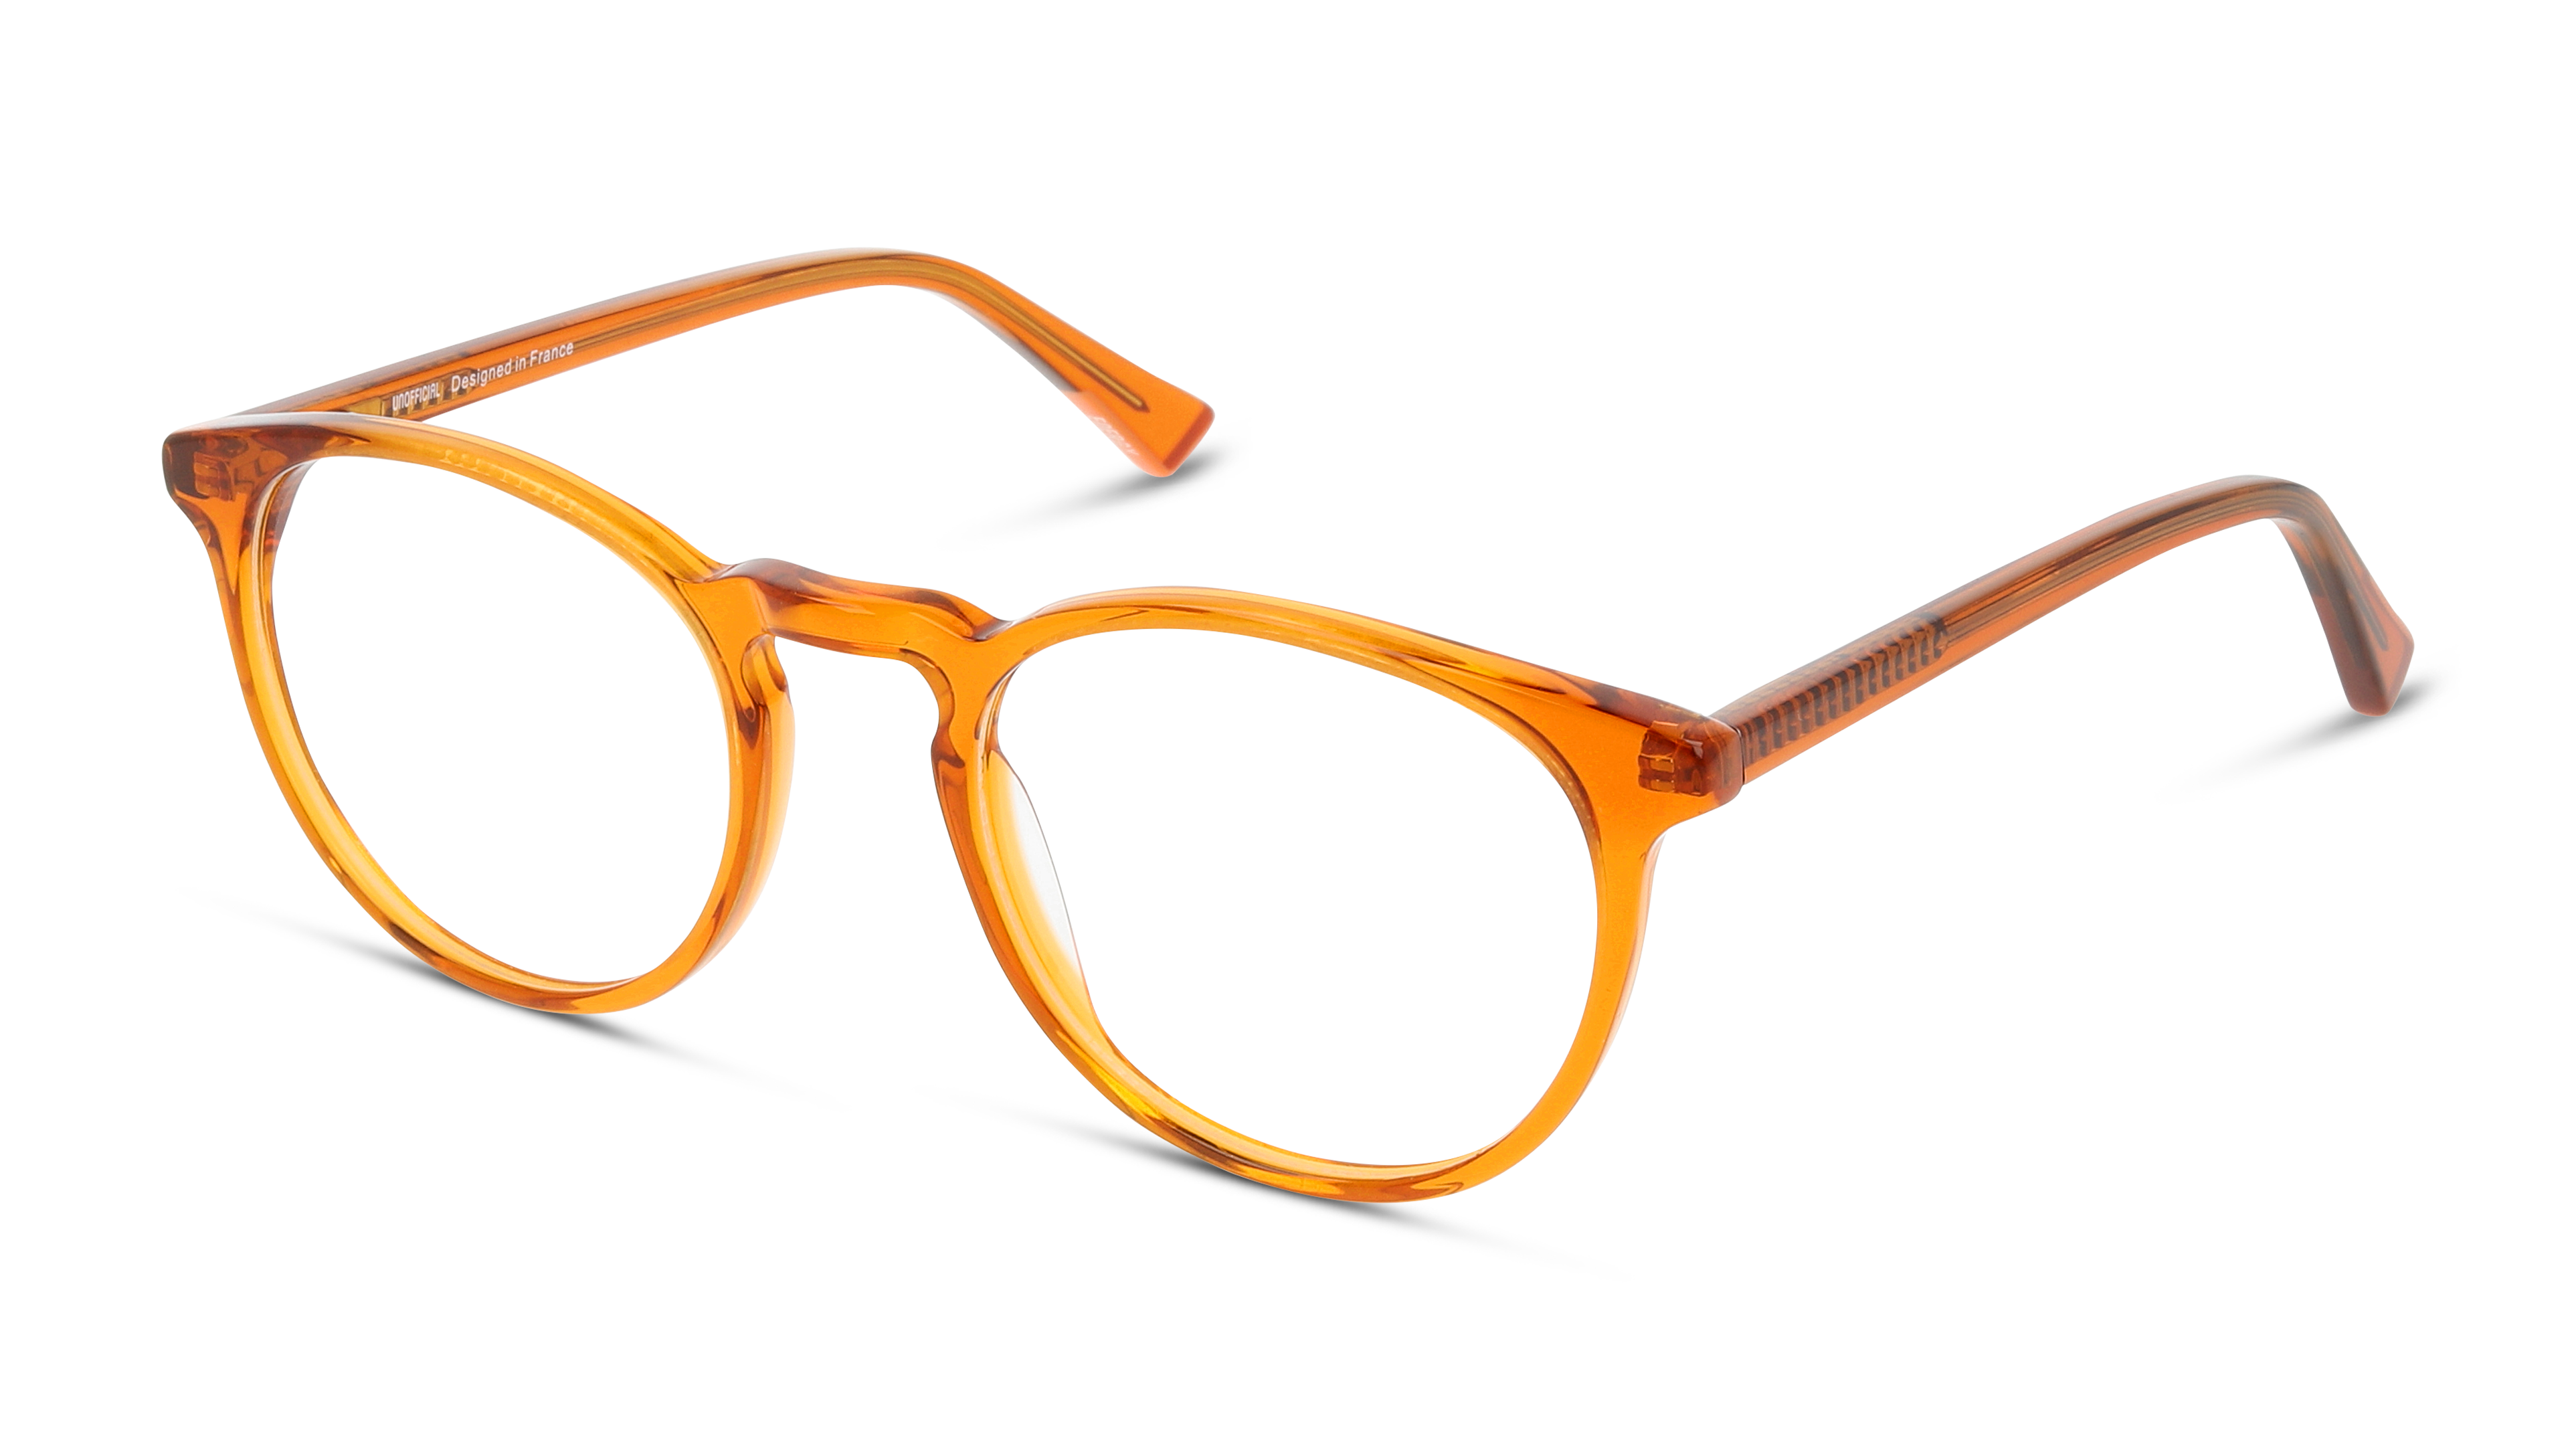 Angle_Left01 Unofficial UNOM0001 (OT00) Glasses Transparent / Orange